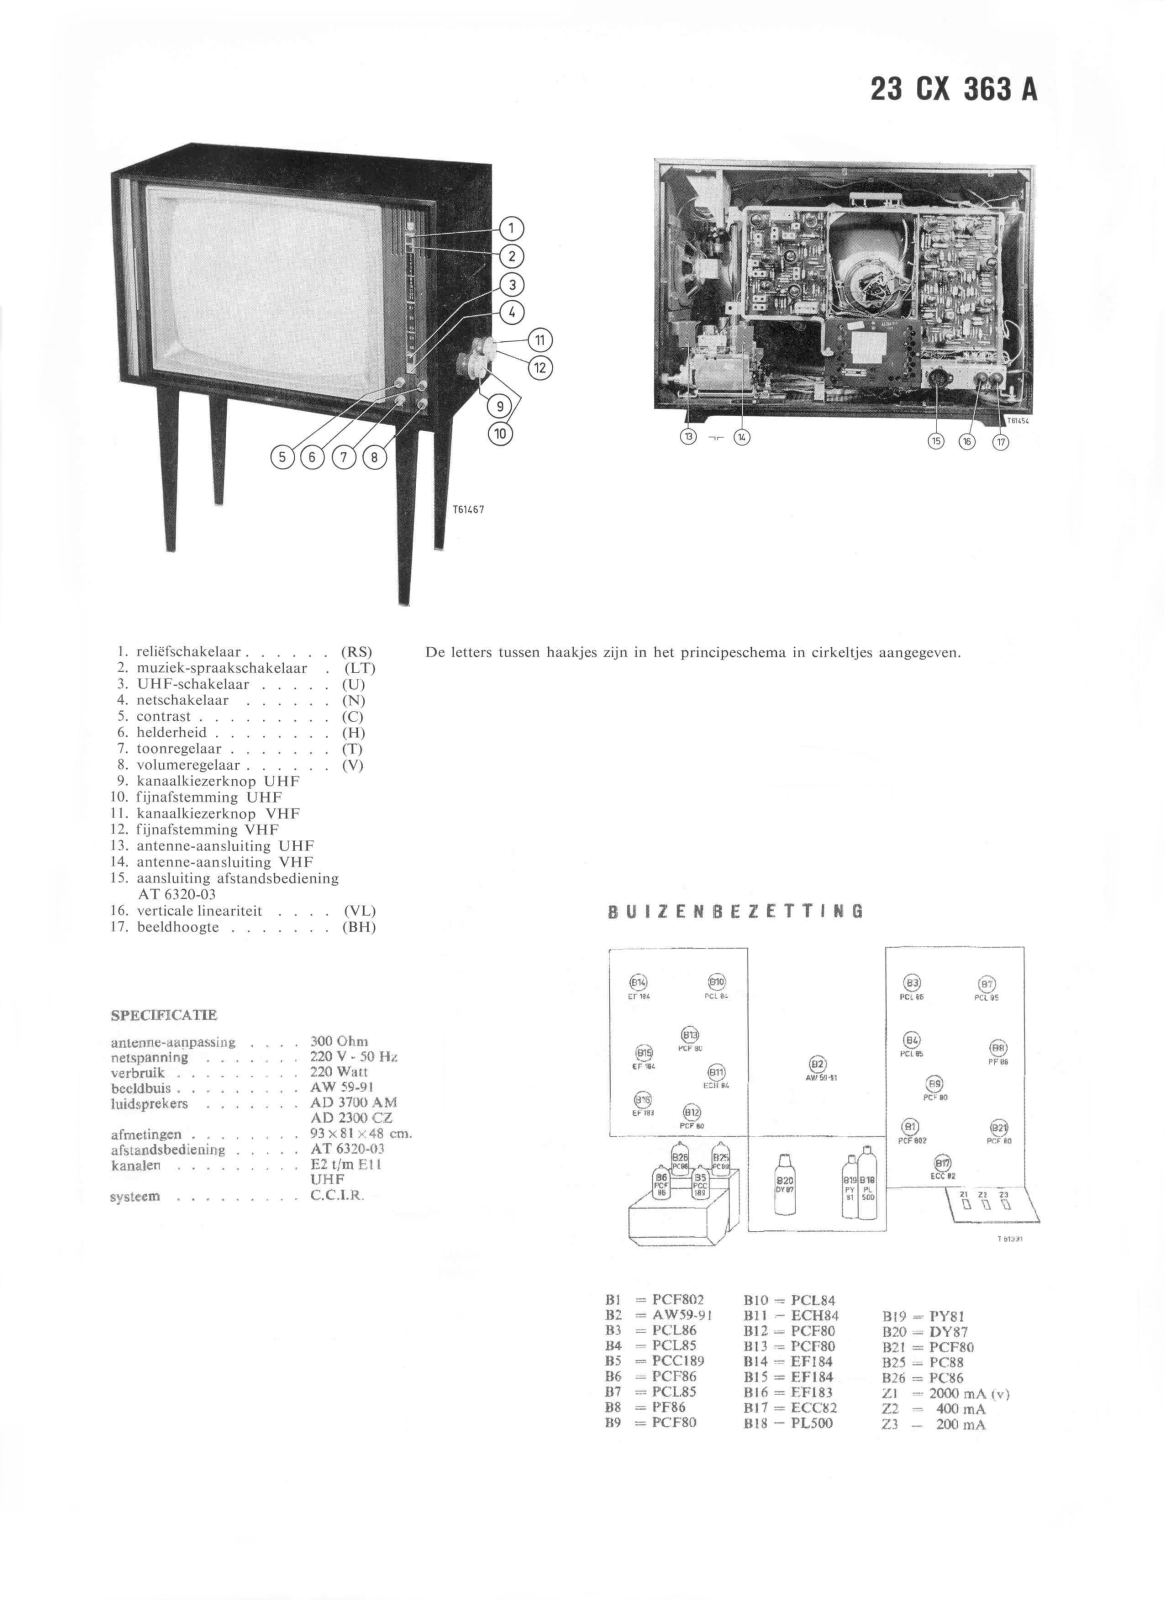 Philips 23CX363A Schematic